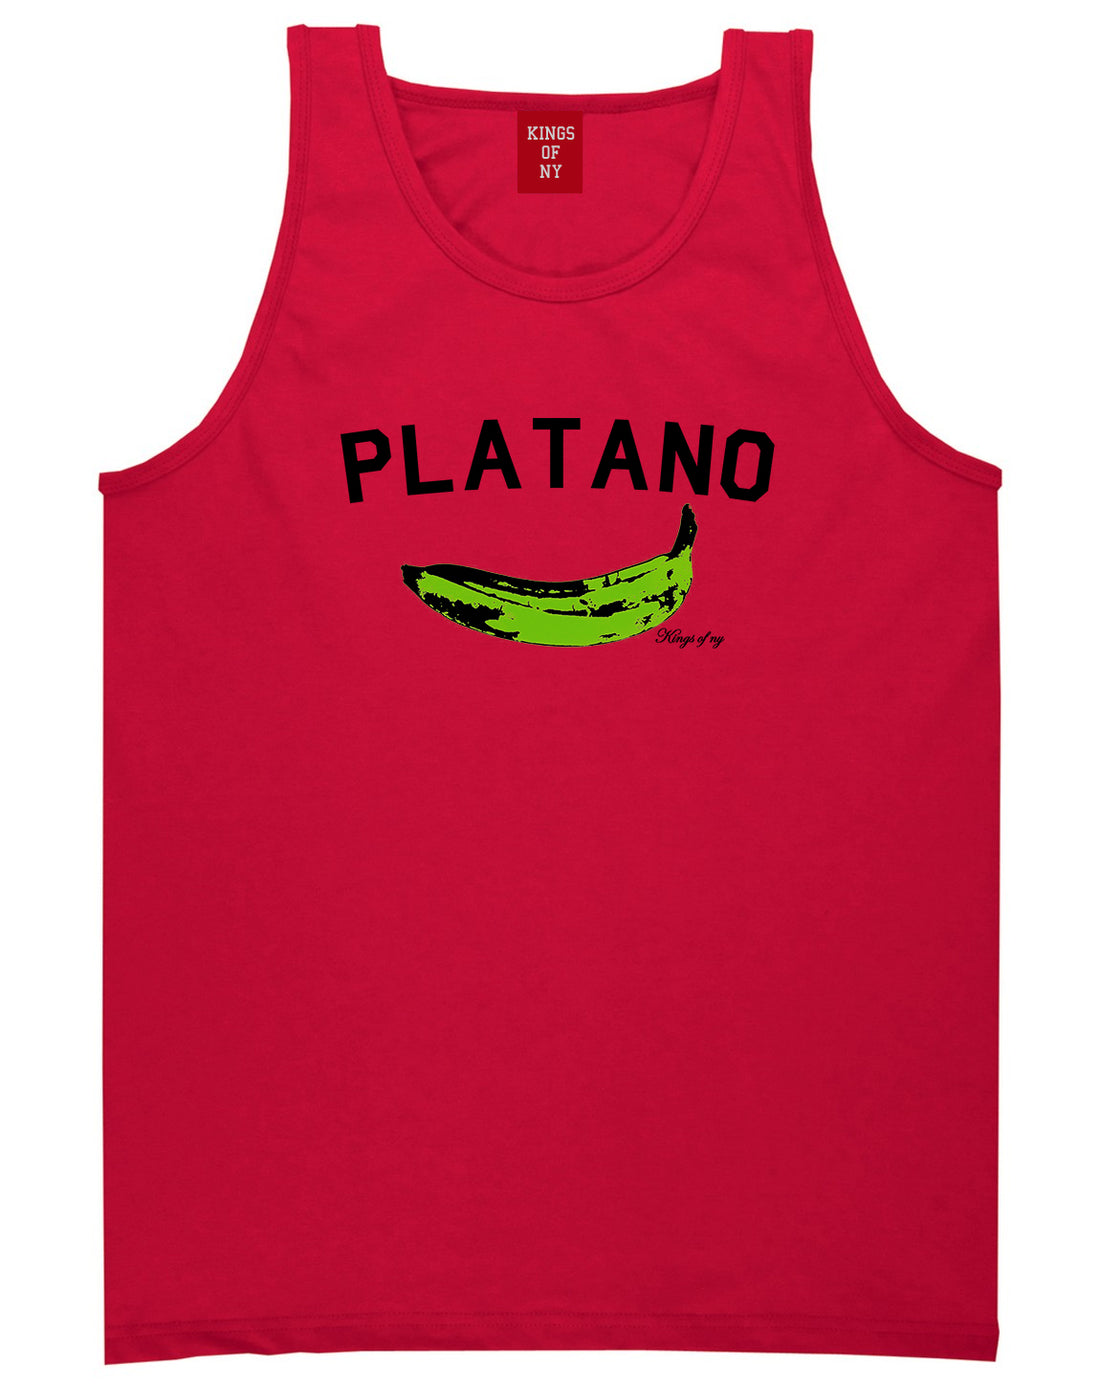 Platano Dominican Artwork DR Mens Tank Top Shirt Red